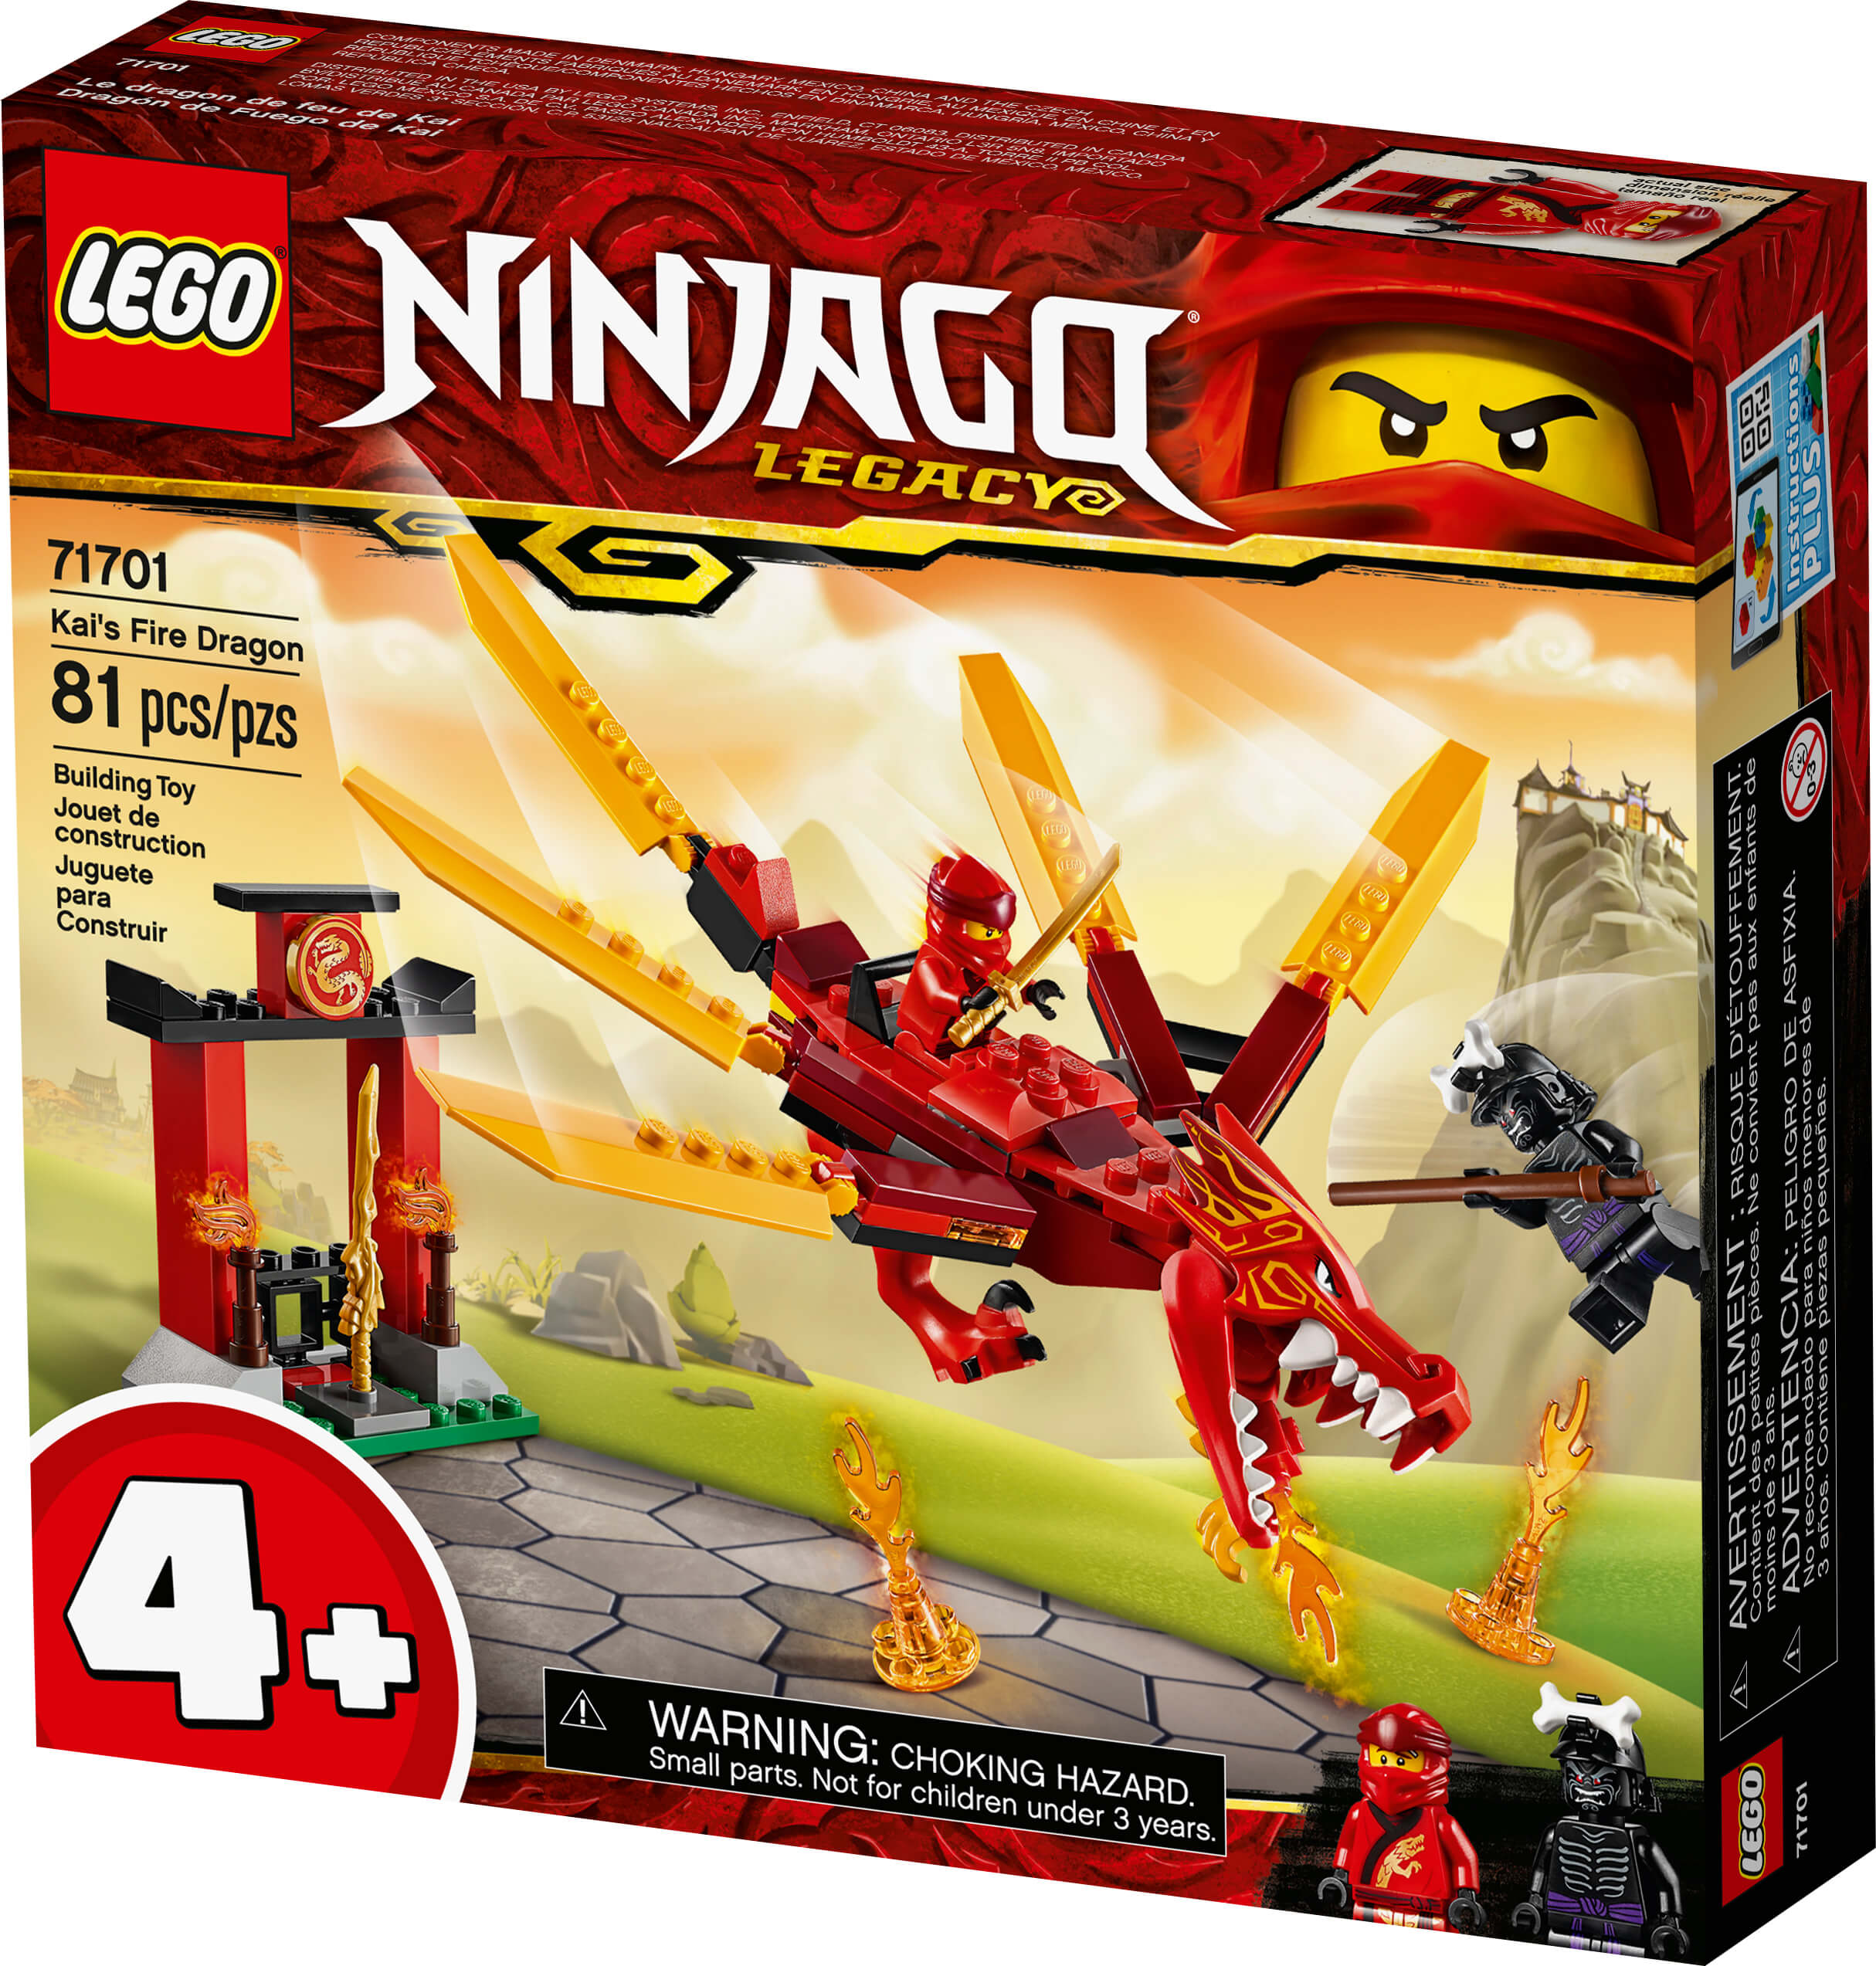 Kai's fire dragon LEGO package